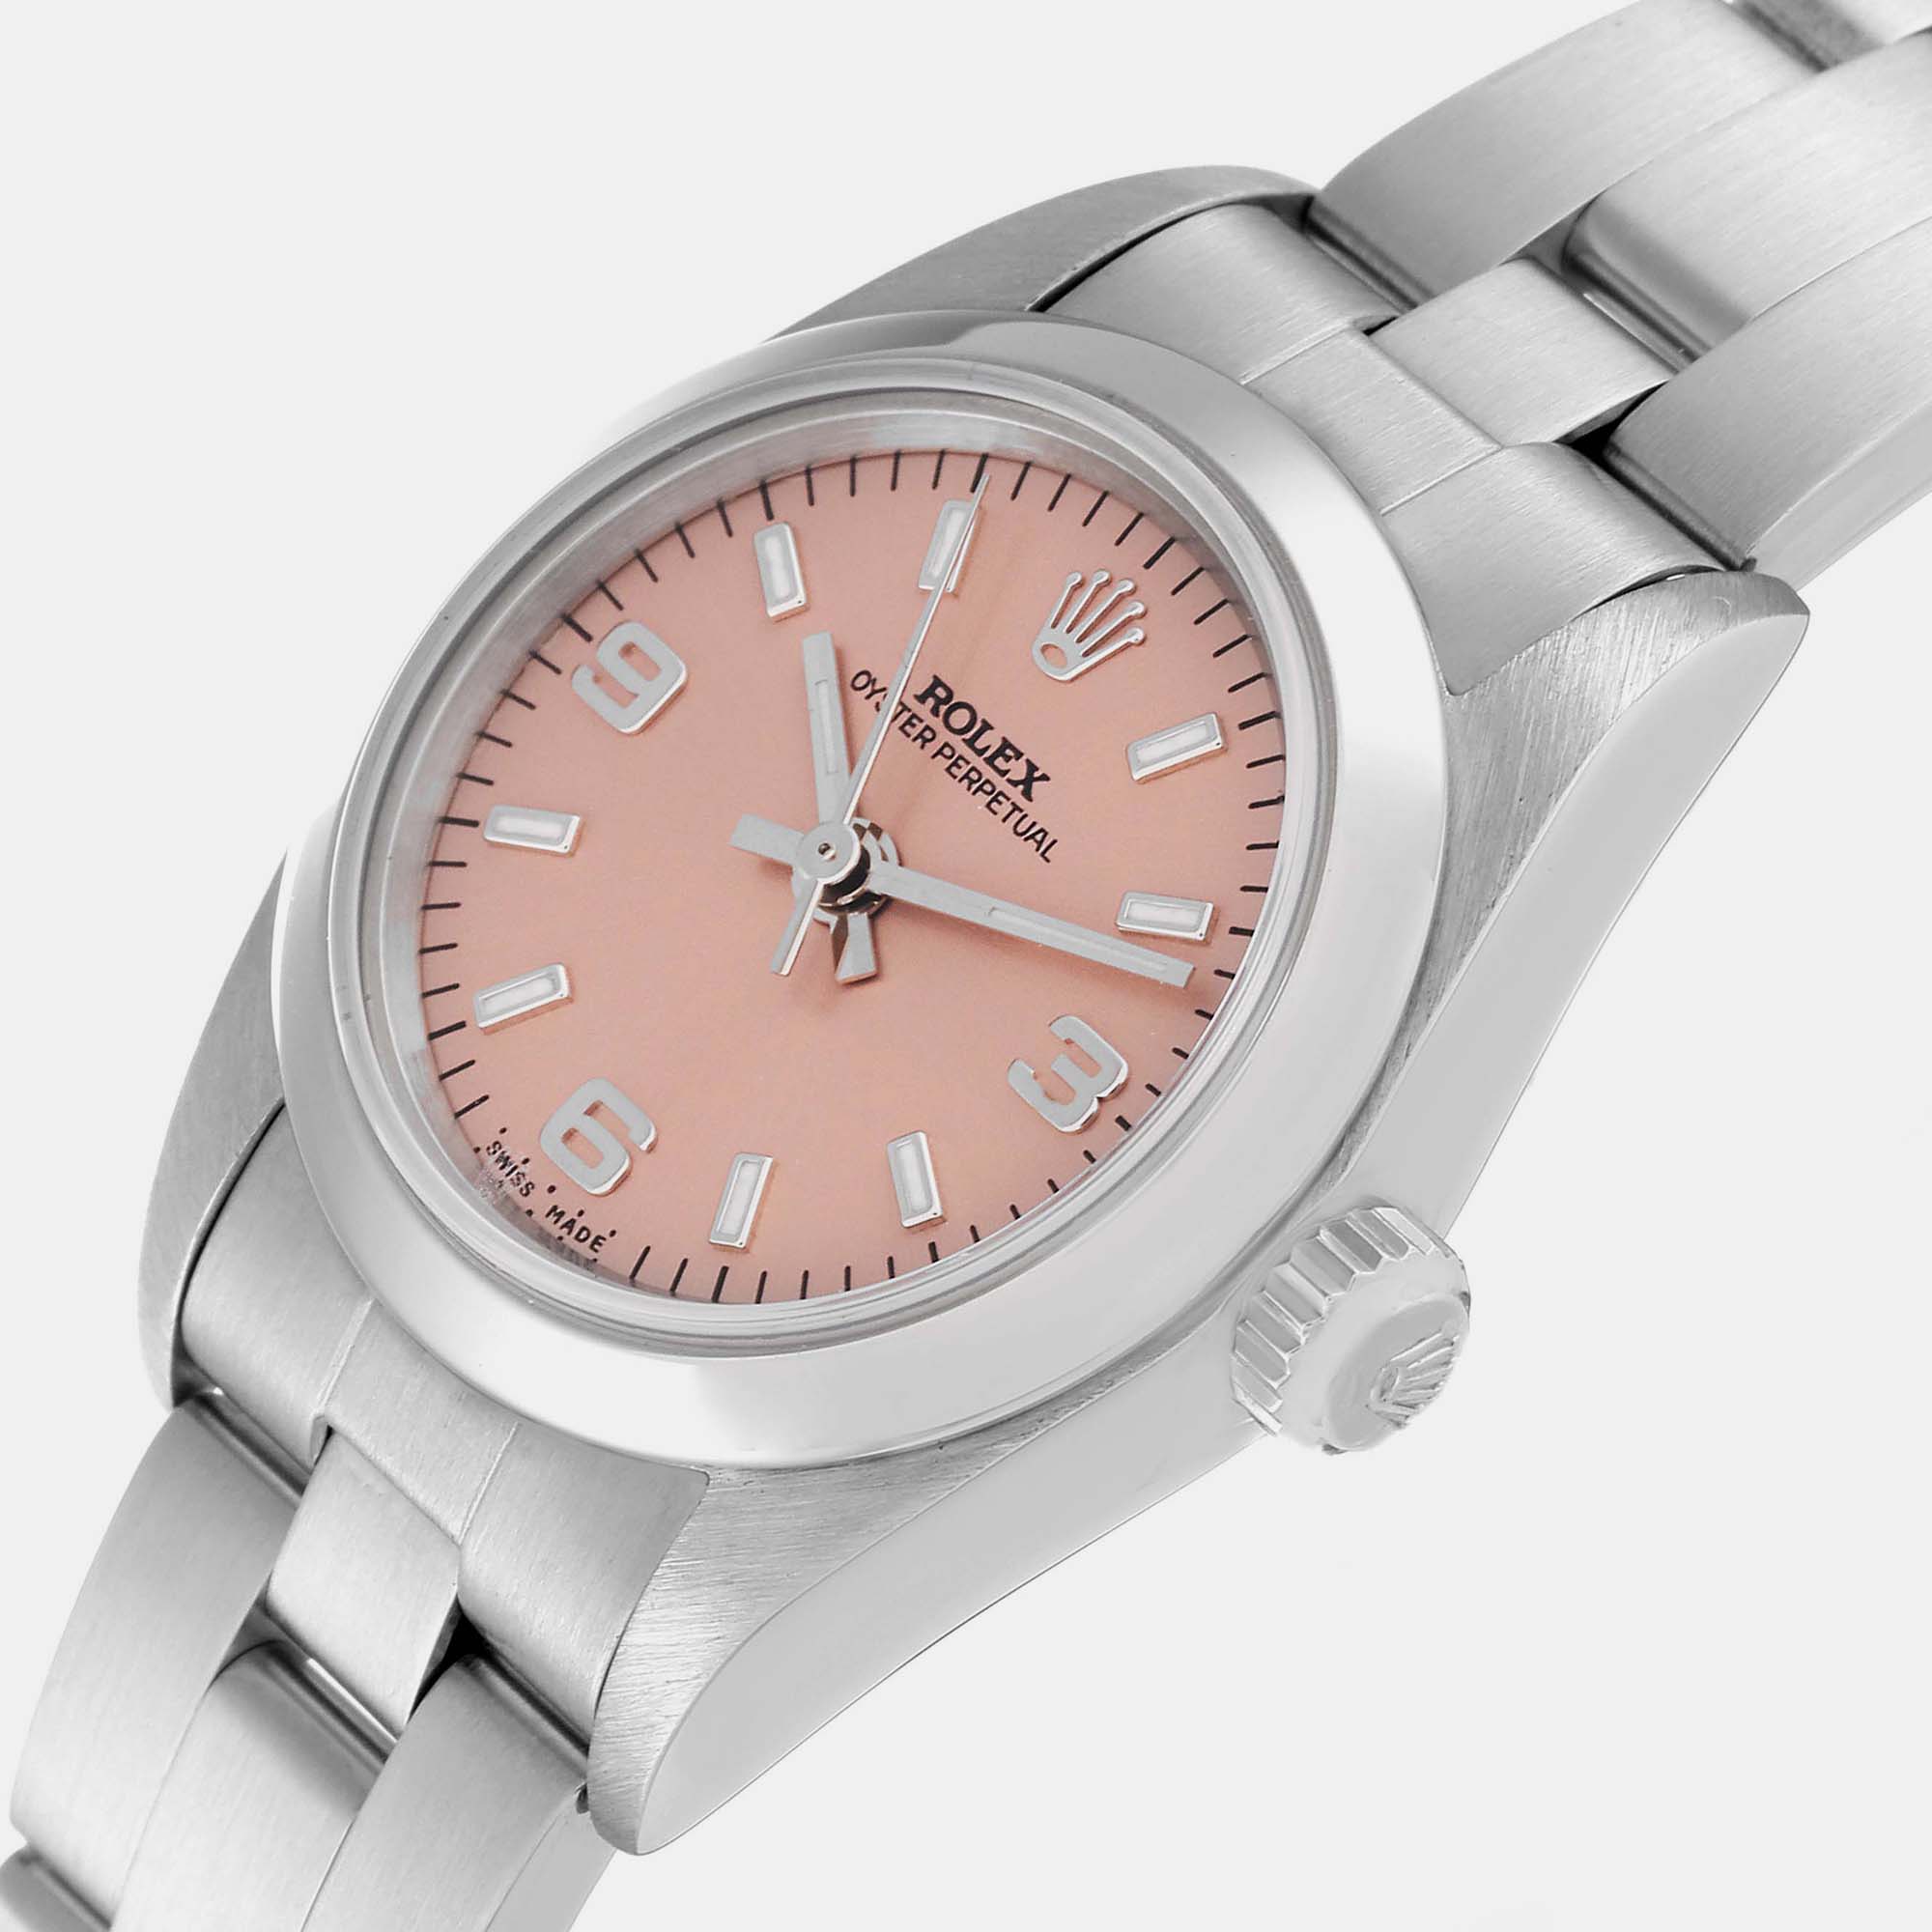 

Rolex Oyster Perpetual Salmon Dial Steel Ladies Watch 76080 24 mm, Pink